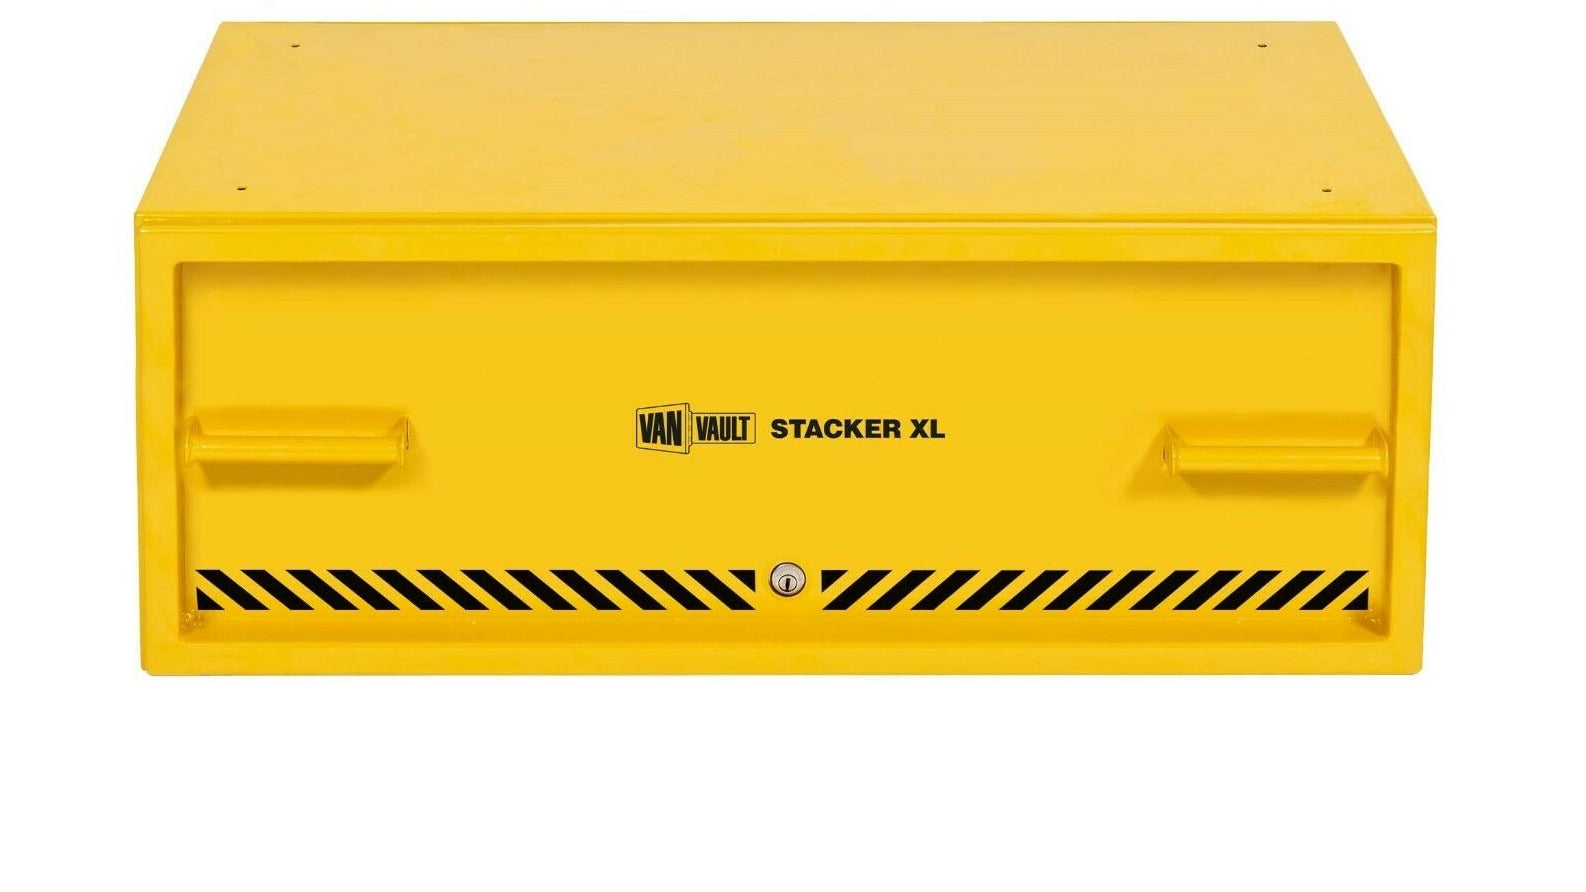 New Van Vault STACKER XL S10890 Heavy Duty Secure Vehicle Security Tool Box